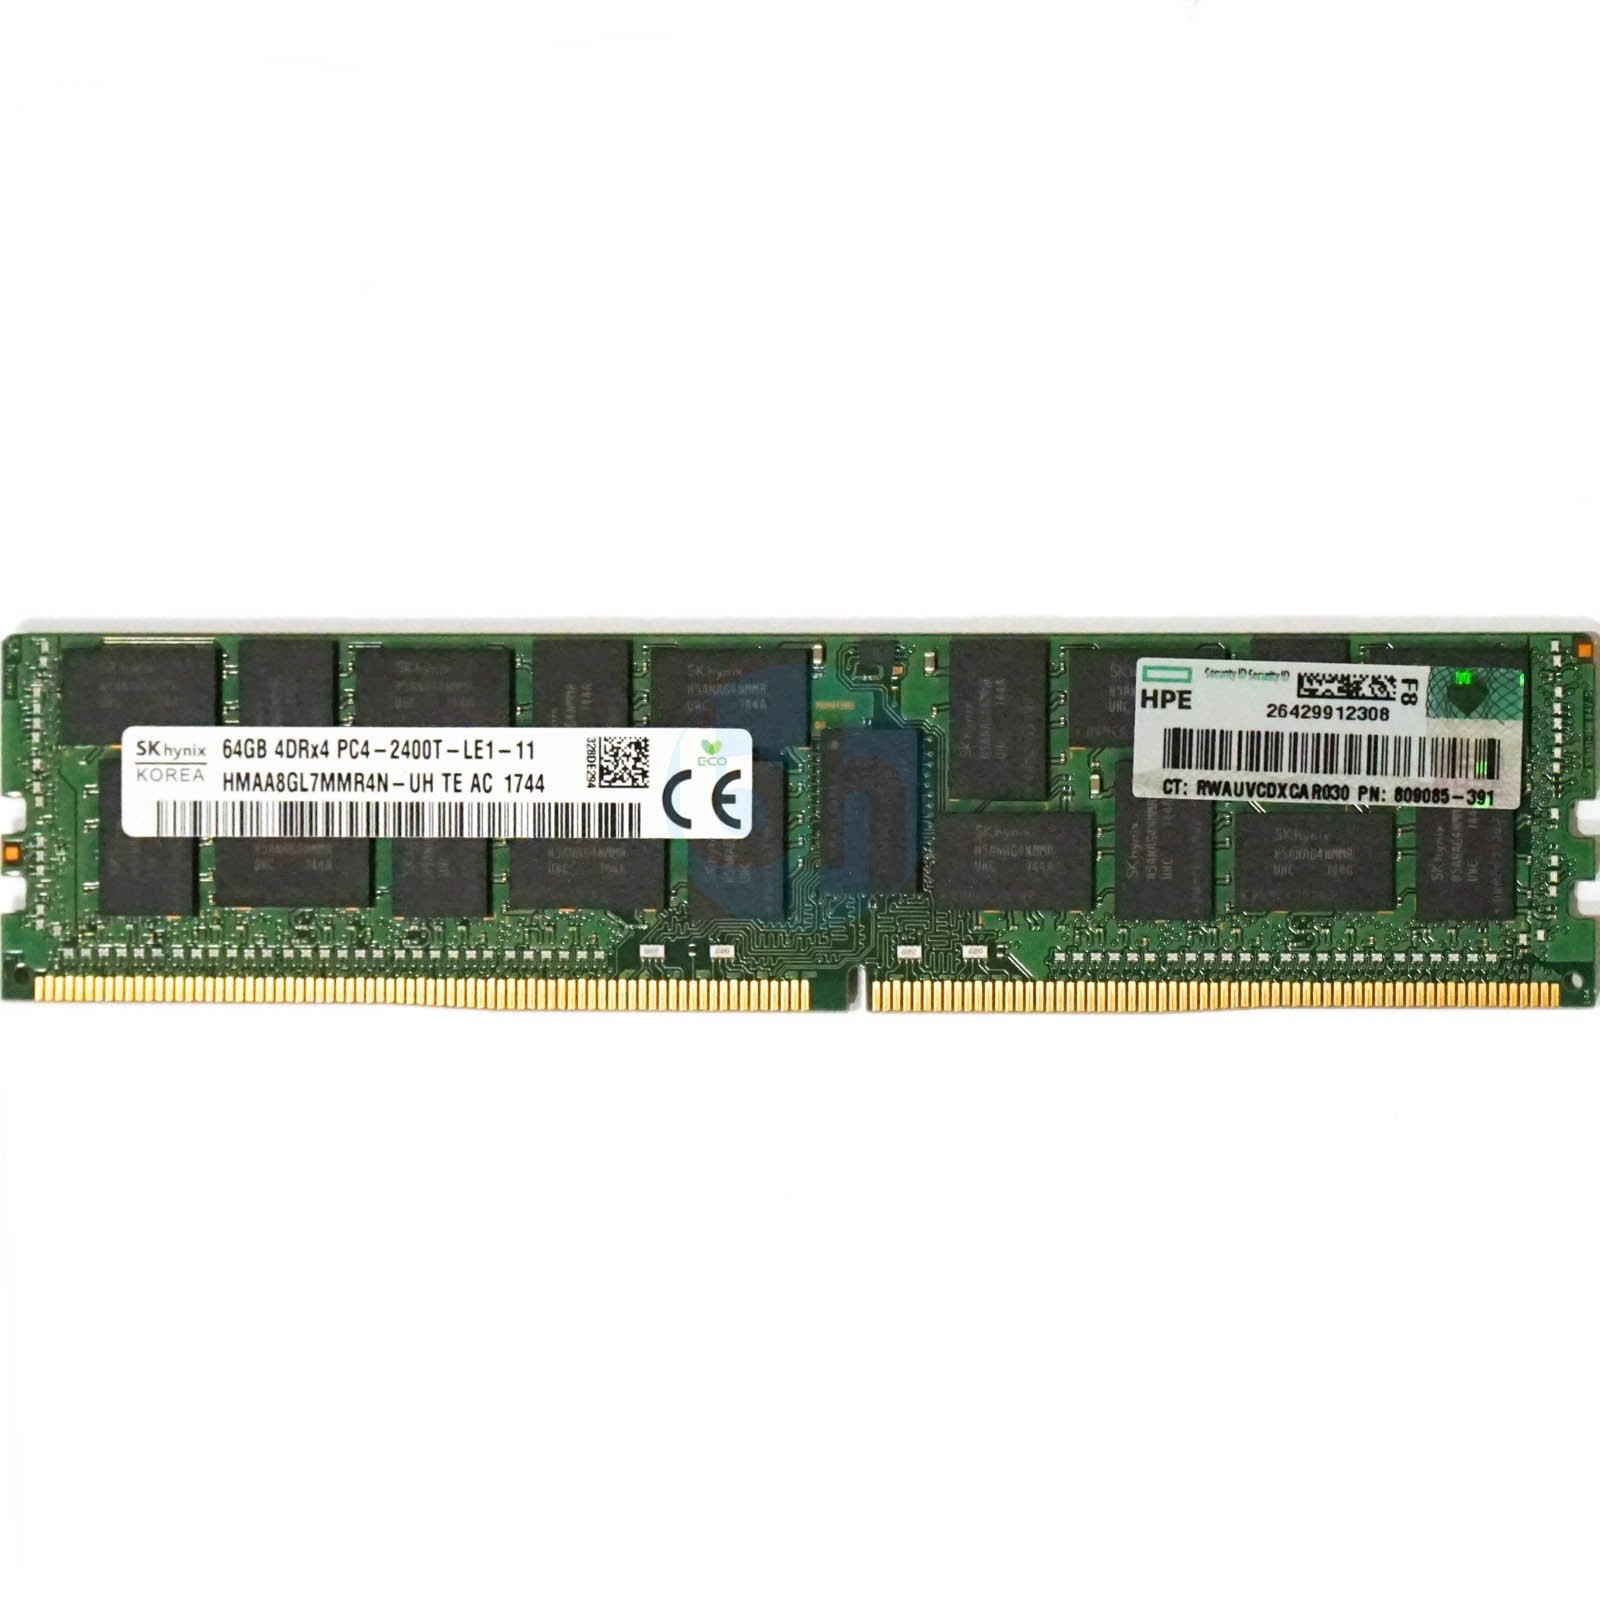 HP (809085-391) - 64GB PC4-19200T-LR (4DRX4, 2400MHz) RAM